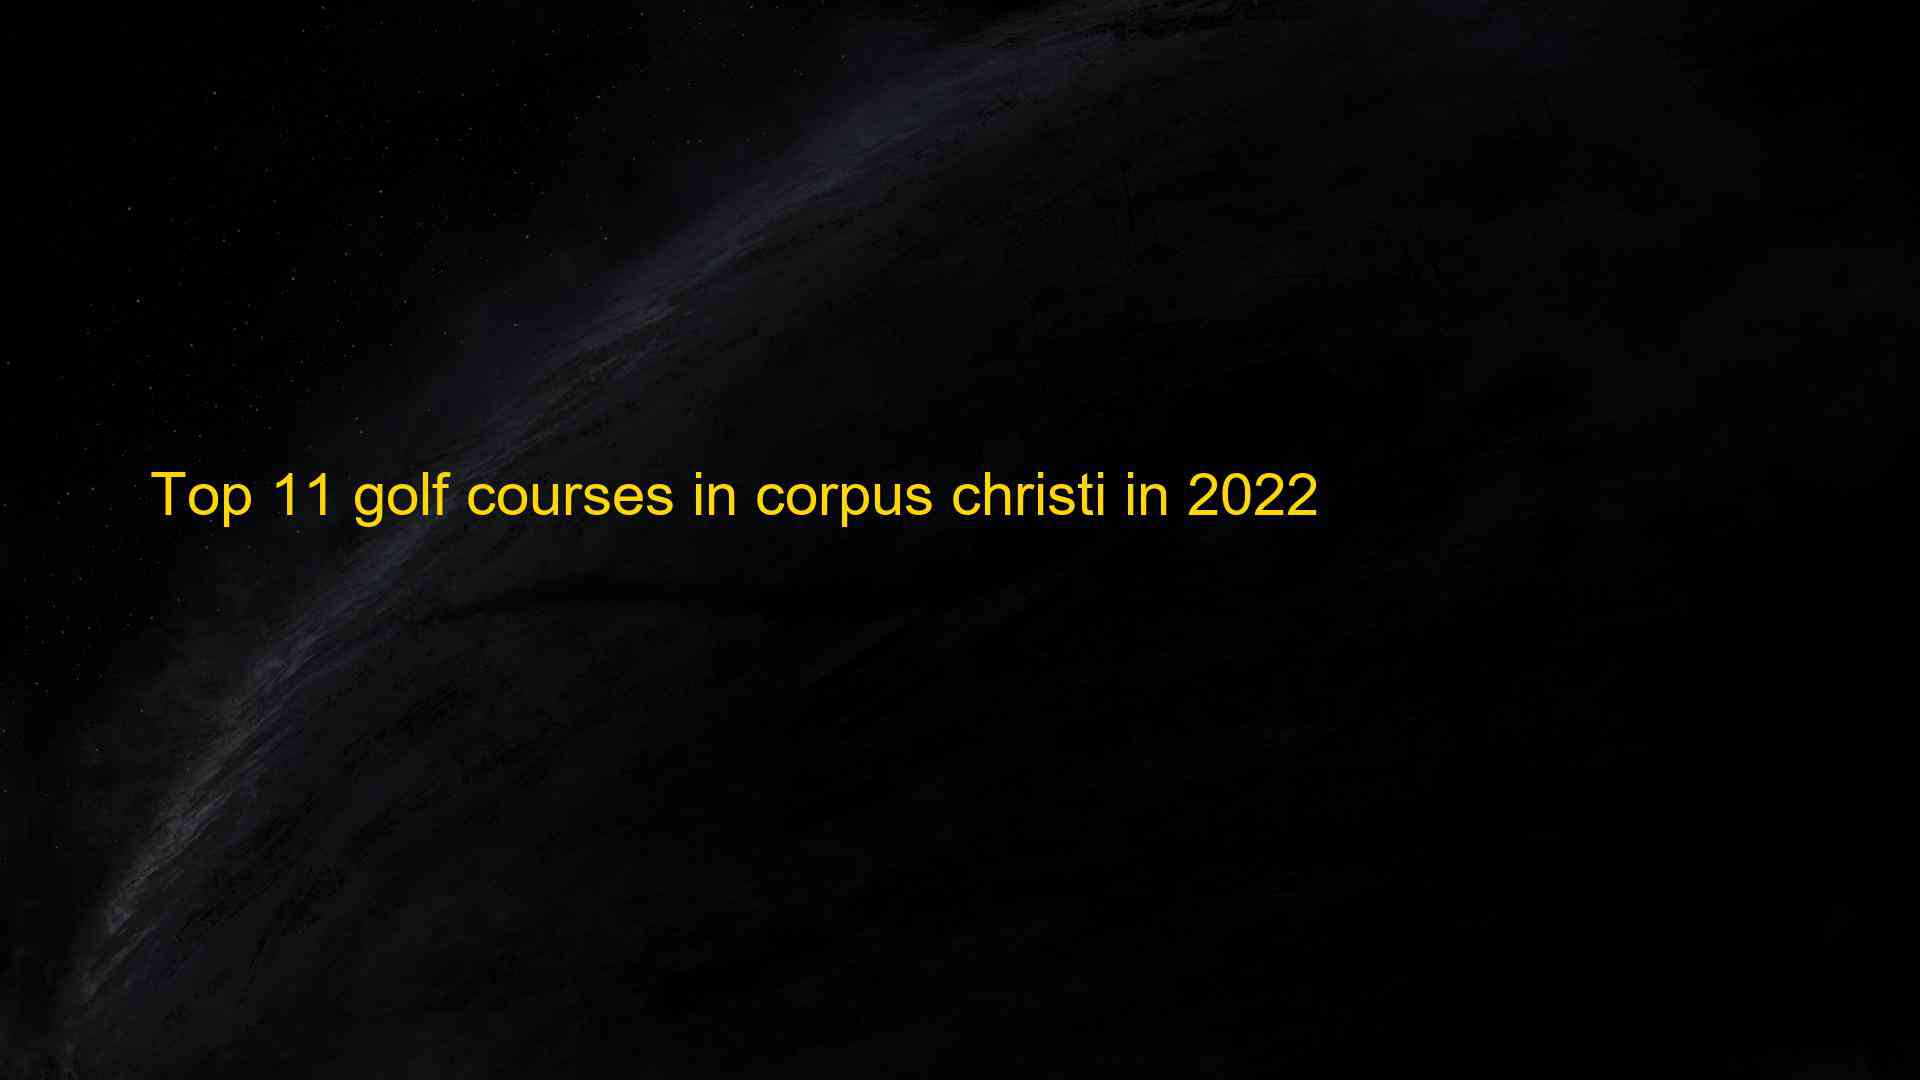 Top 11 golf courses in corpus christi in 2022 1661795463